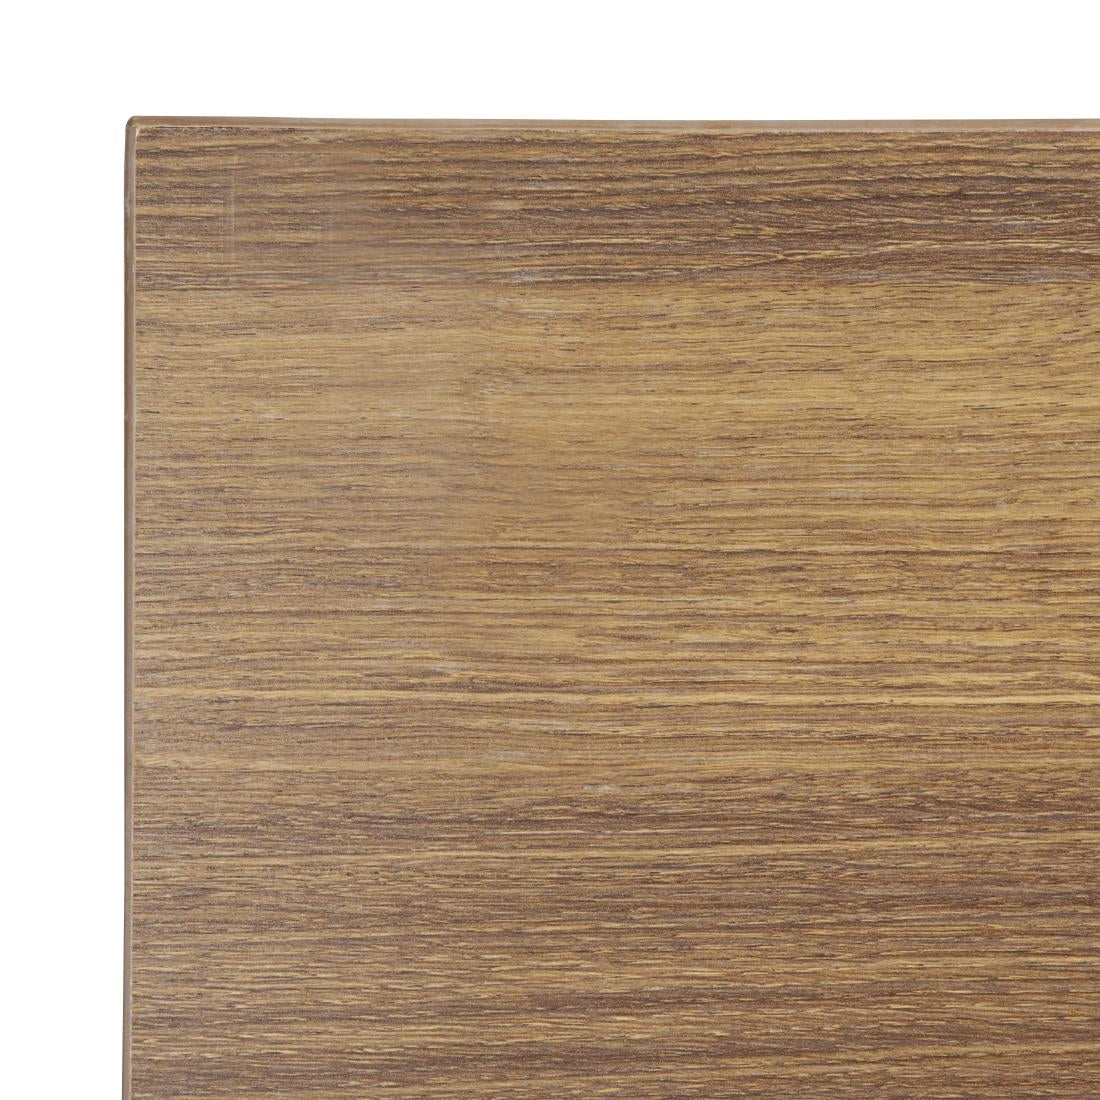 Bolero Pre-drilled Square Table Top Rustic Oak 700mm JD Catering Equipment Solutions Ltd